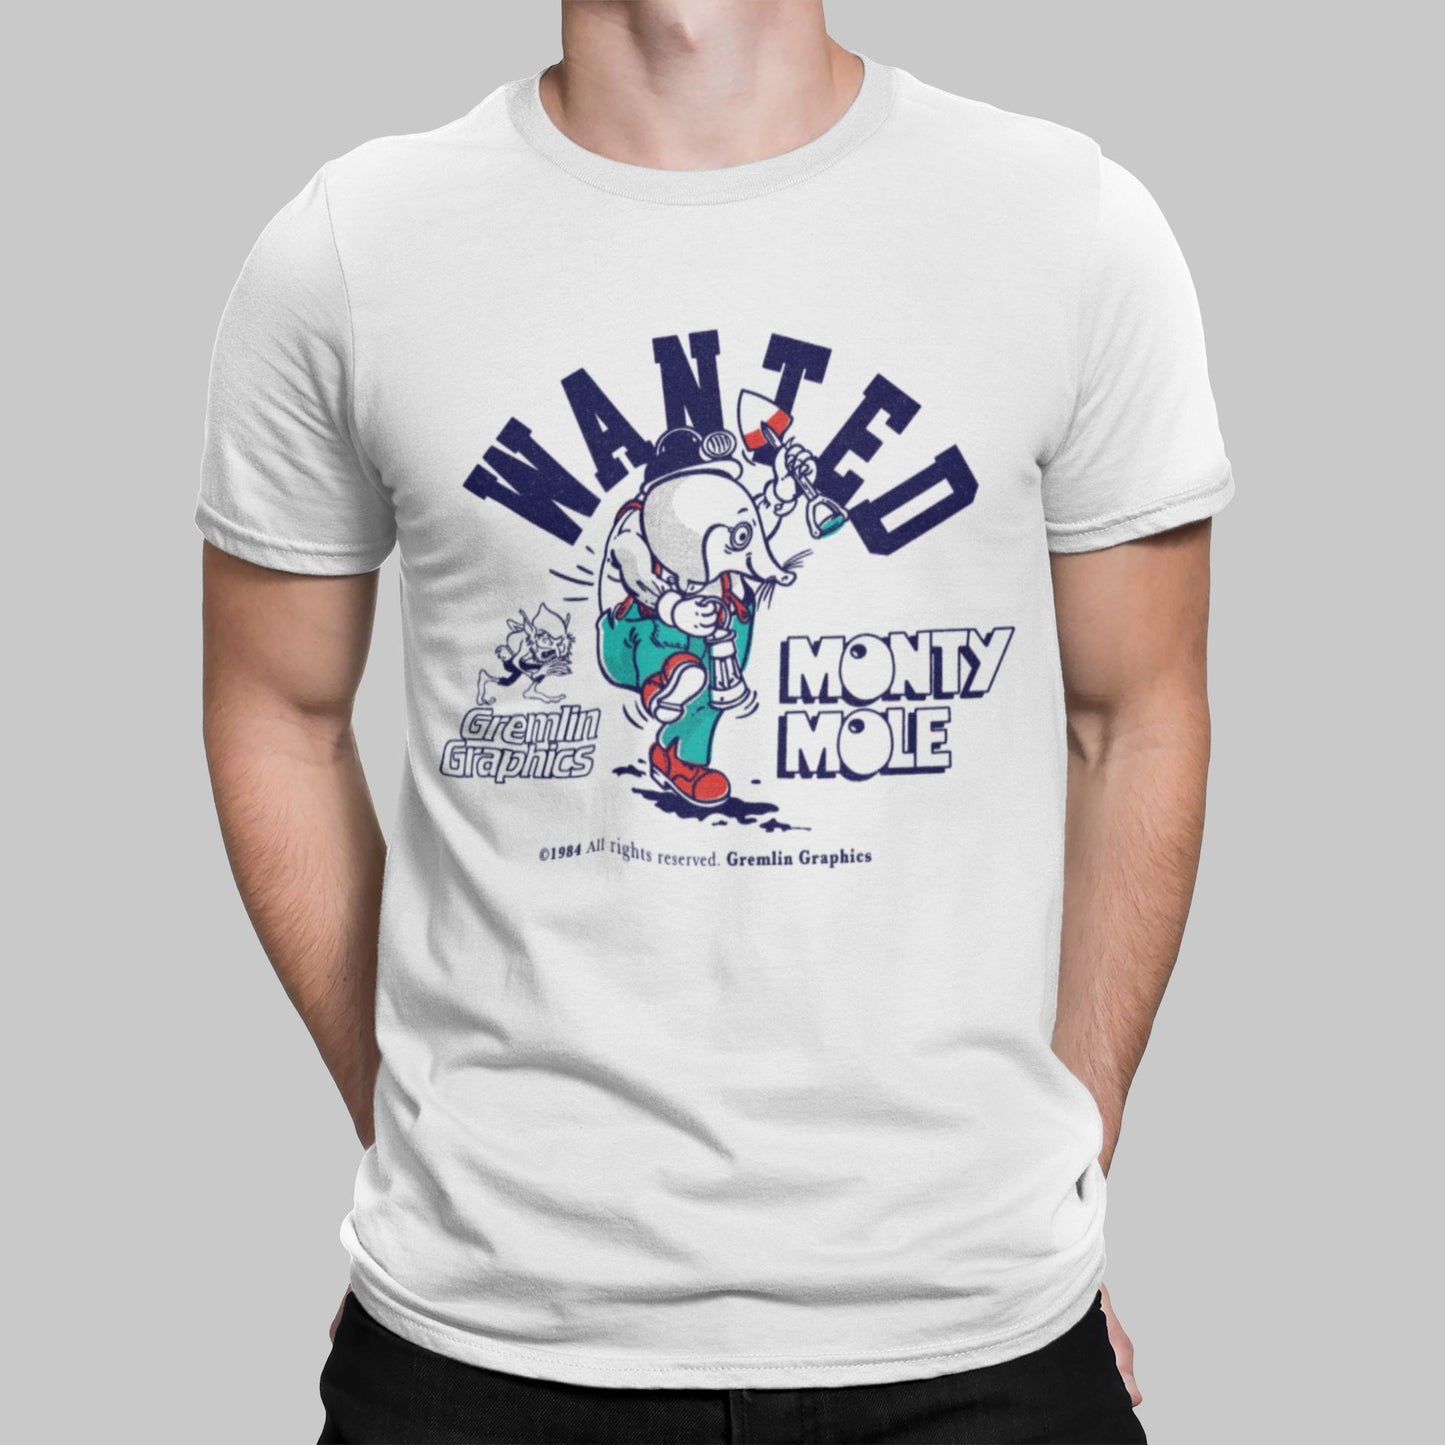 Monty Mole Retro Gaming T-Shirt T-Shirt Seven Squared Small 34-36" White 